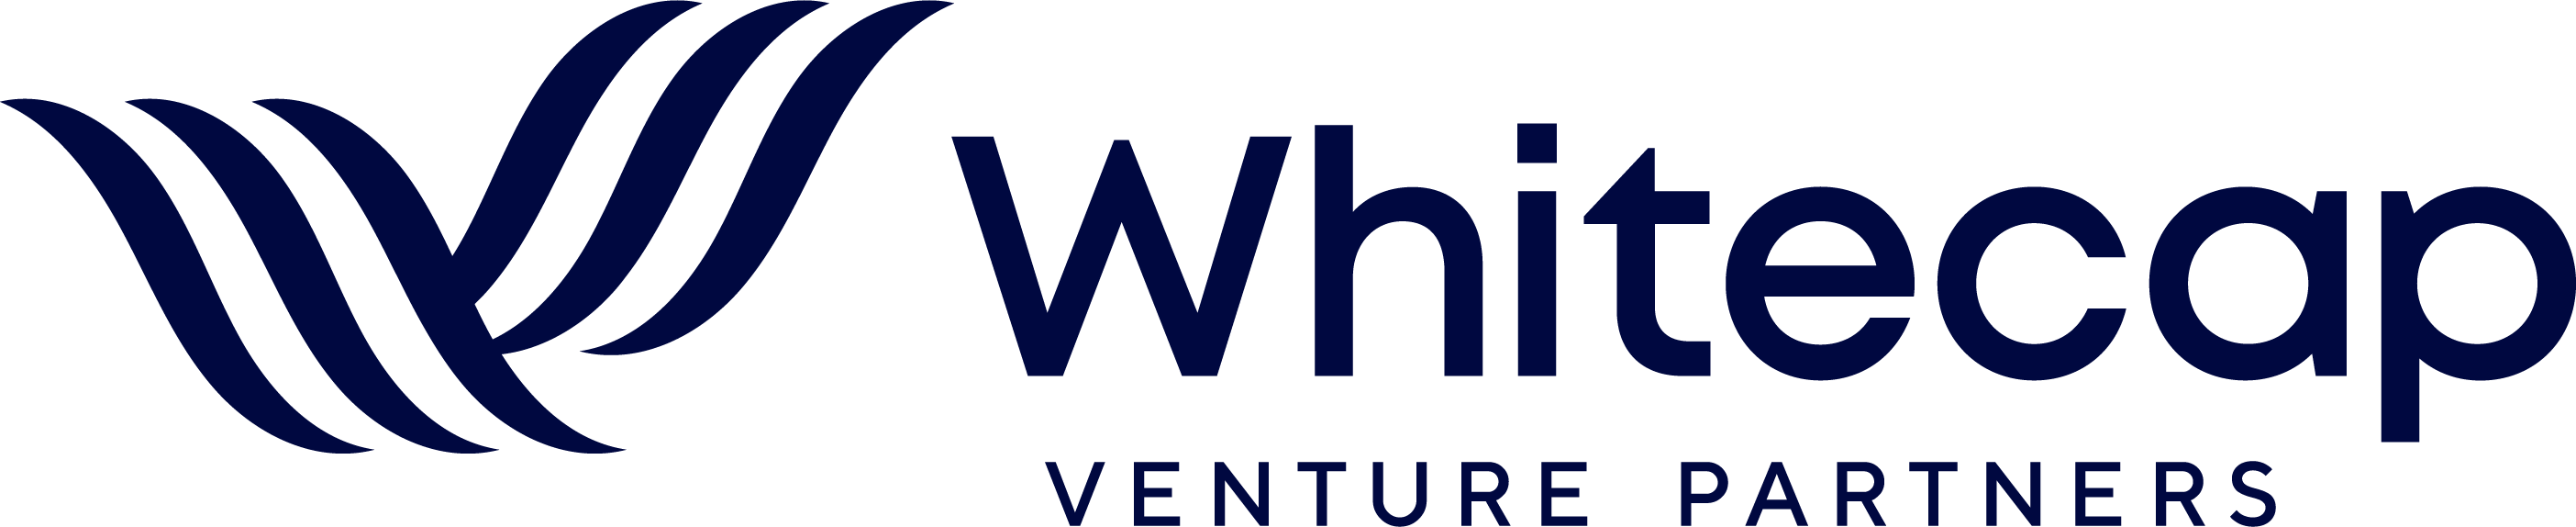 Whitecap Venture Partners